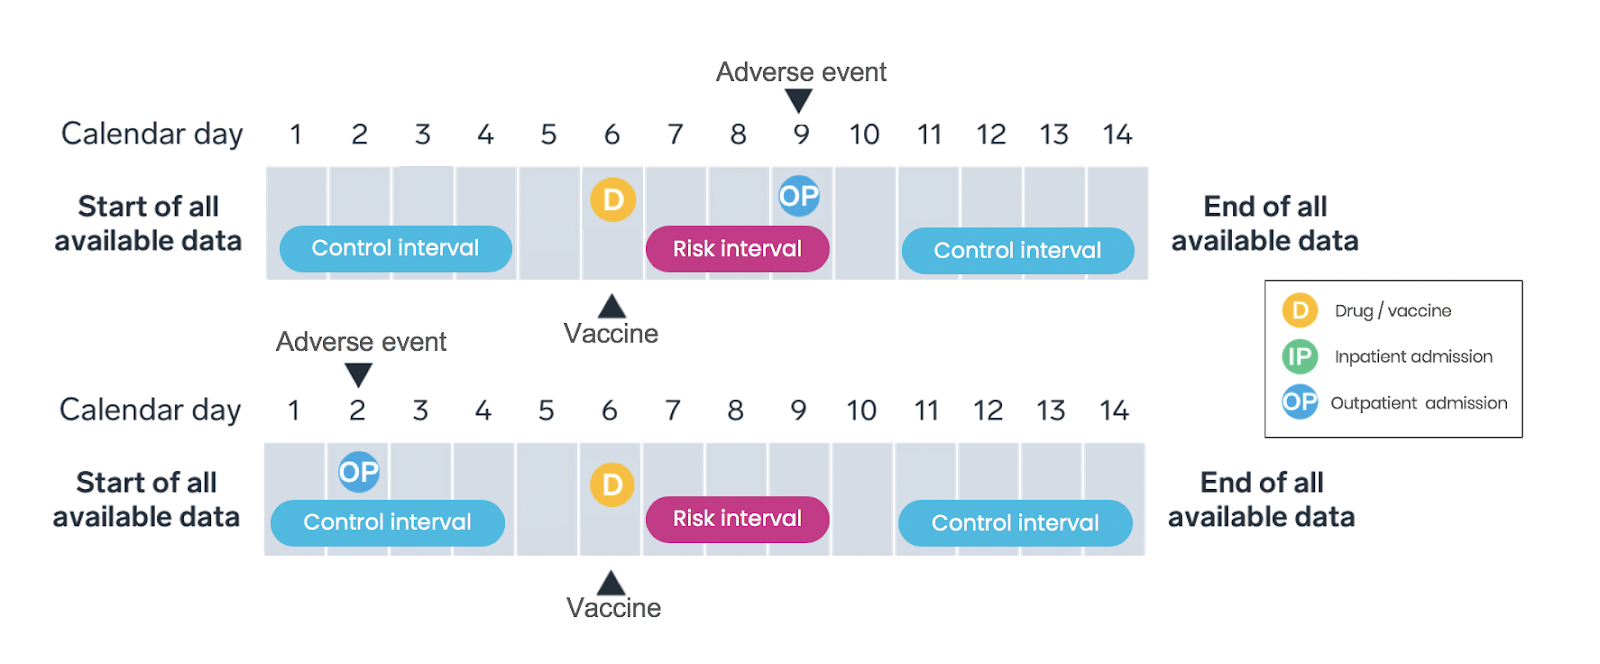 Calendar of vaccine approval process